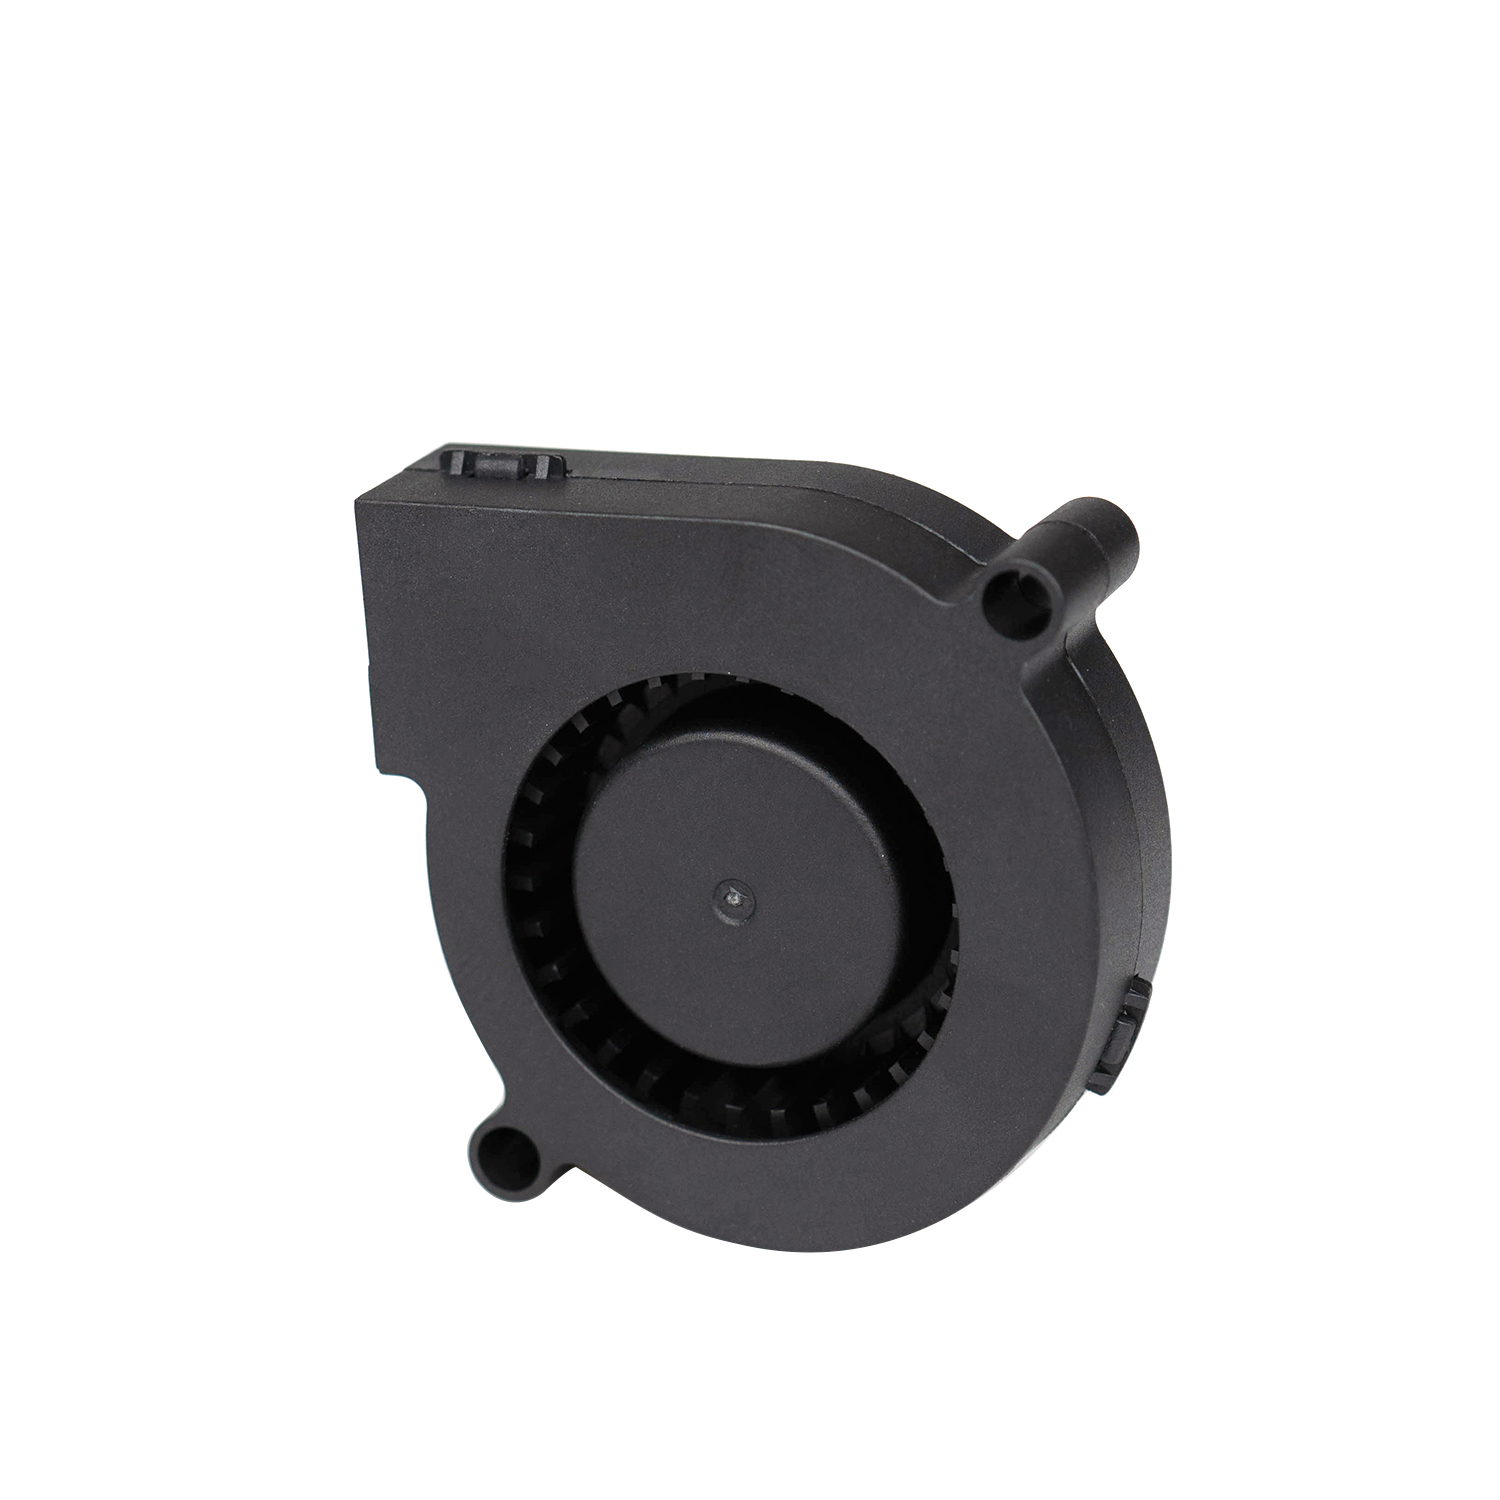 50x50x15mm 50mm 5v ball bearing centrifugal dc blower fan